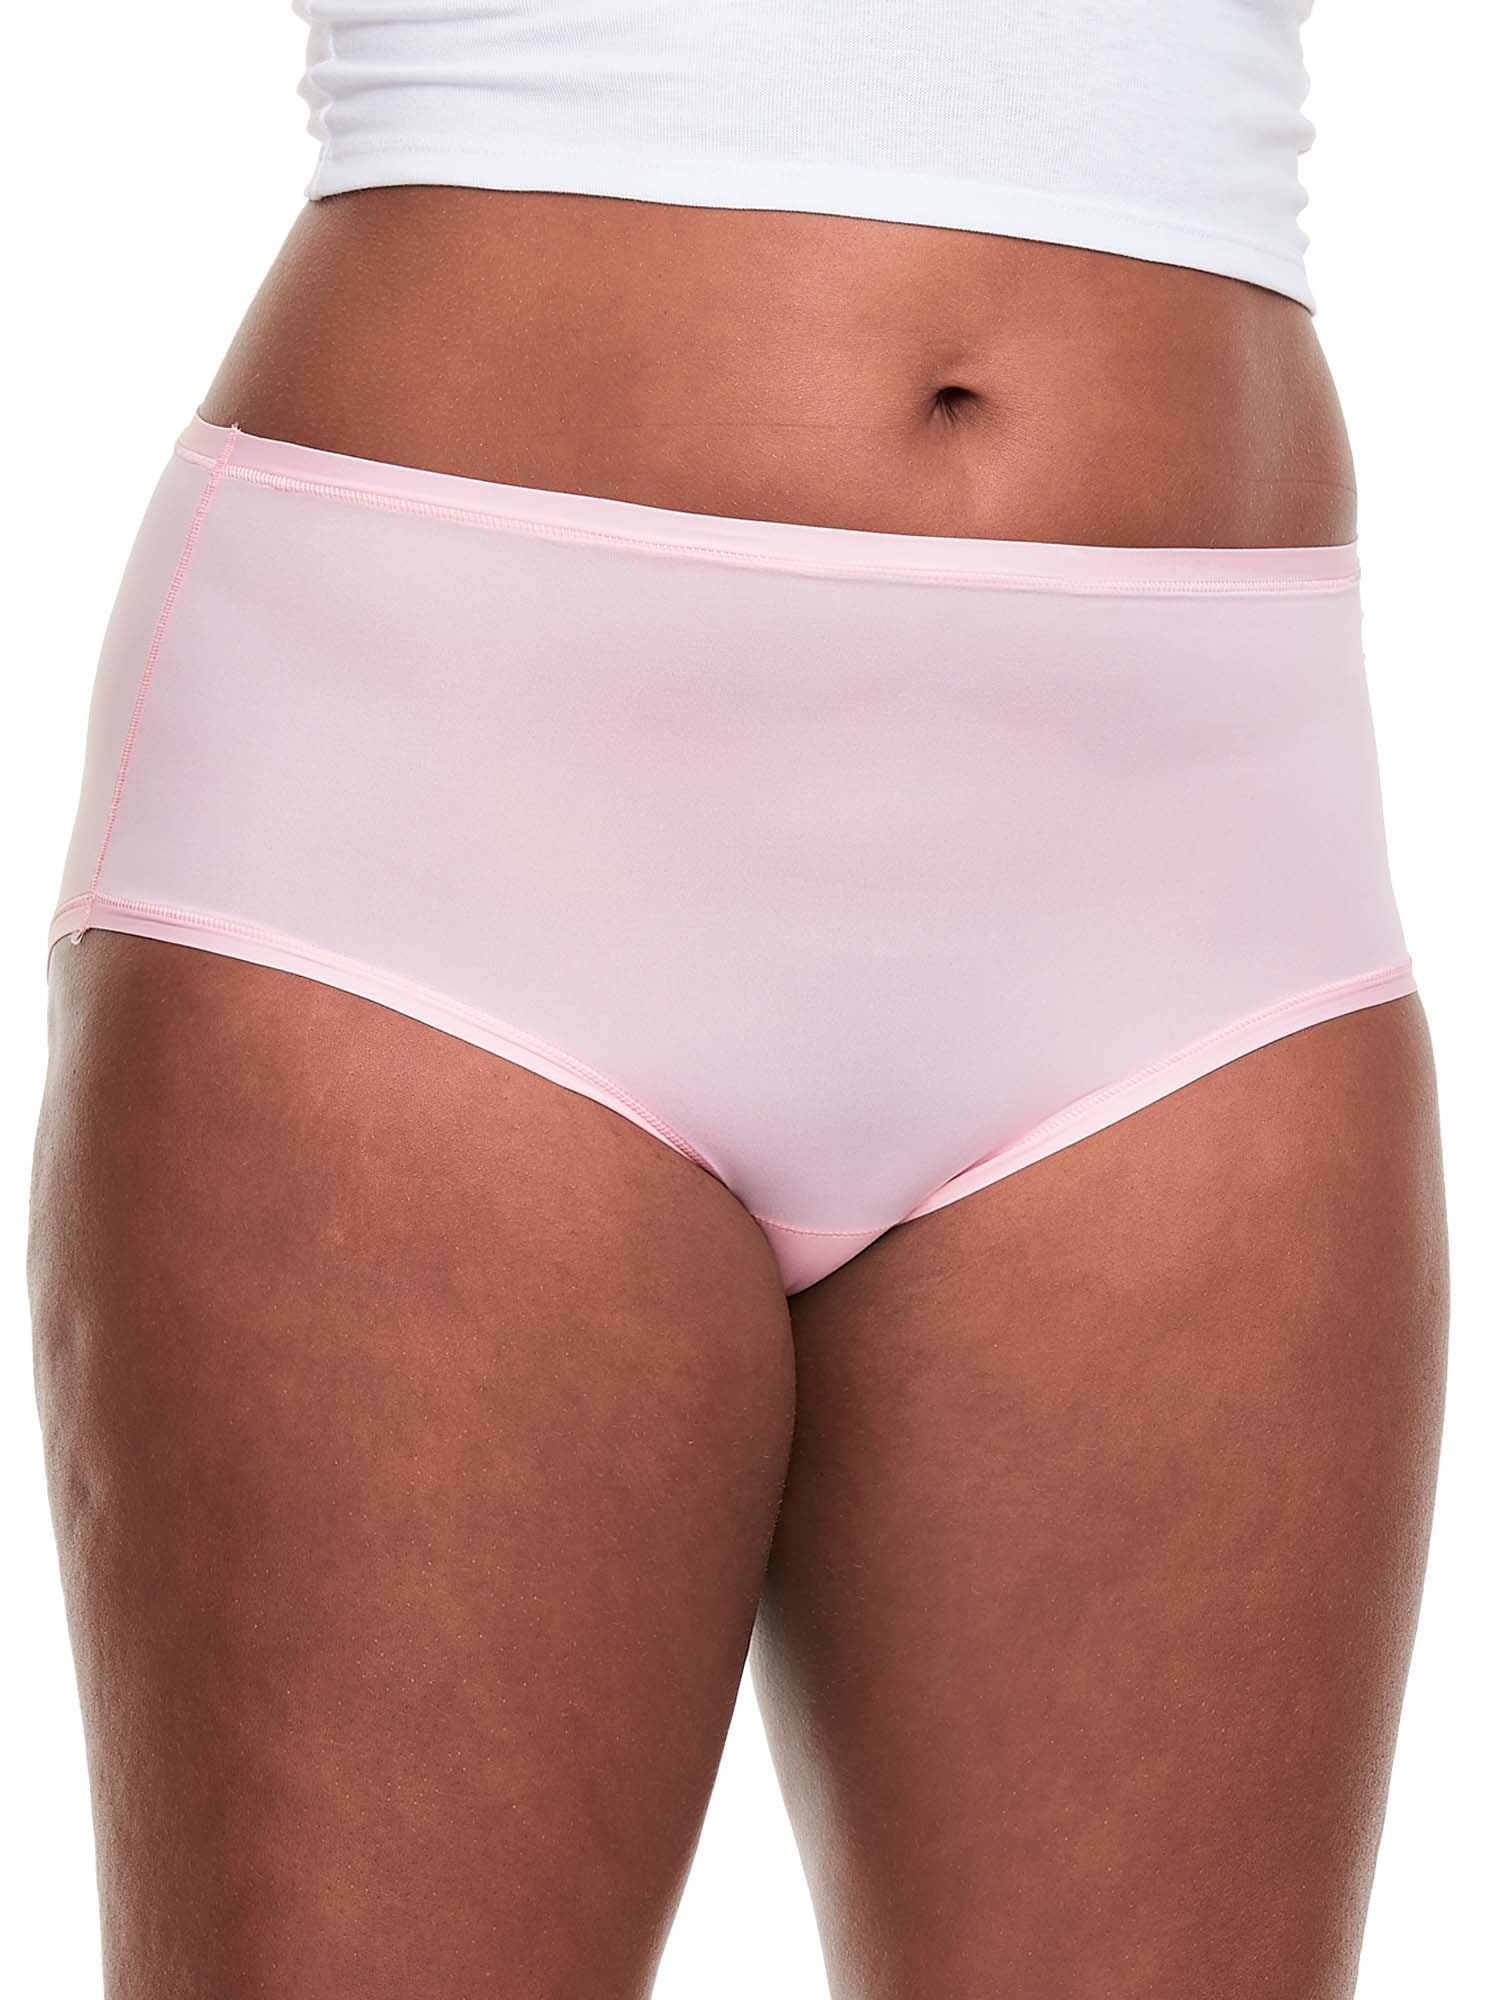 Hanes Women's Core Cotton Briefs Underwear 6pk - Multi 6